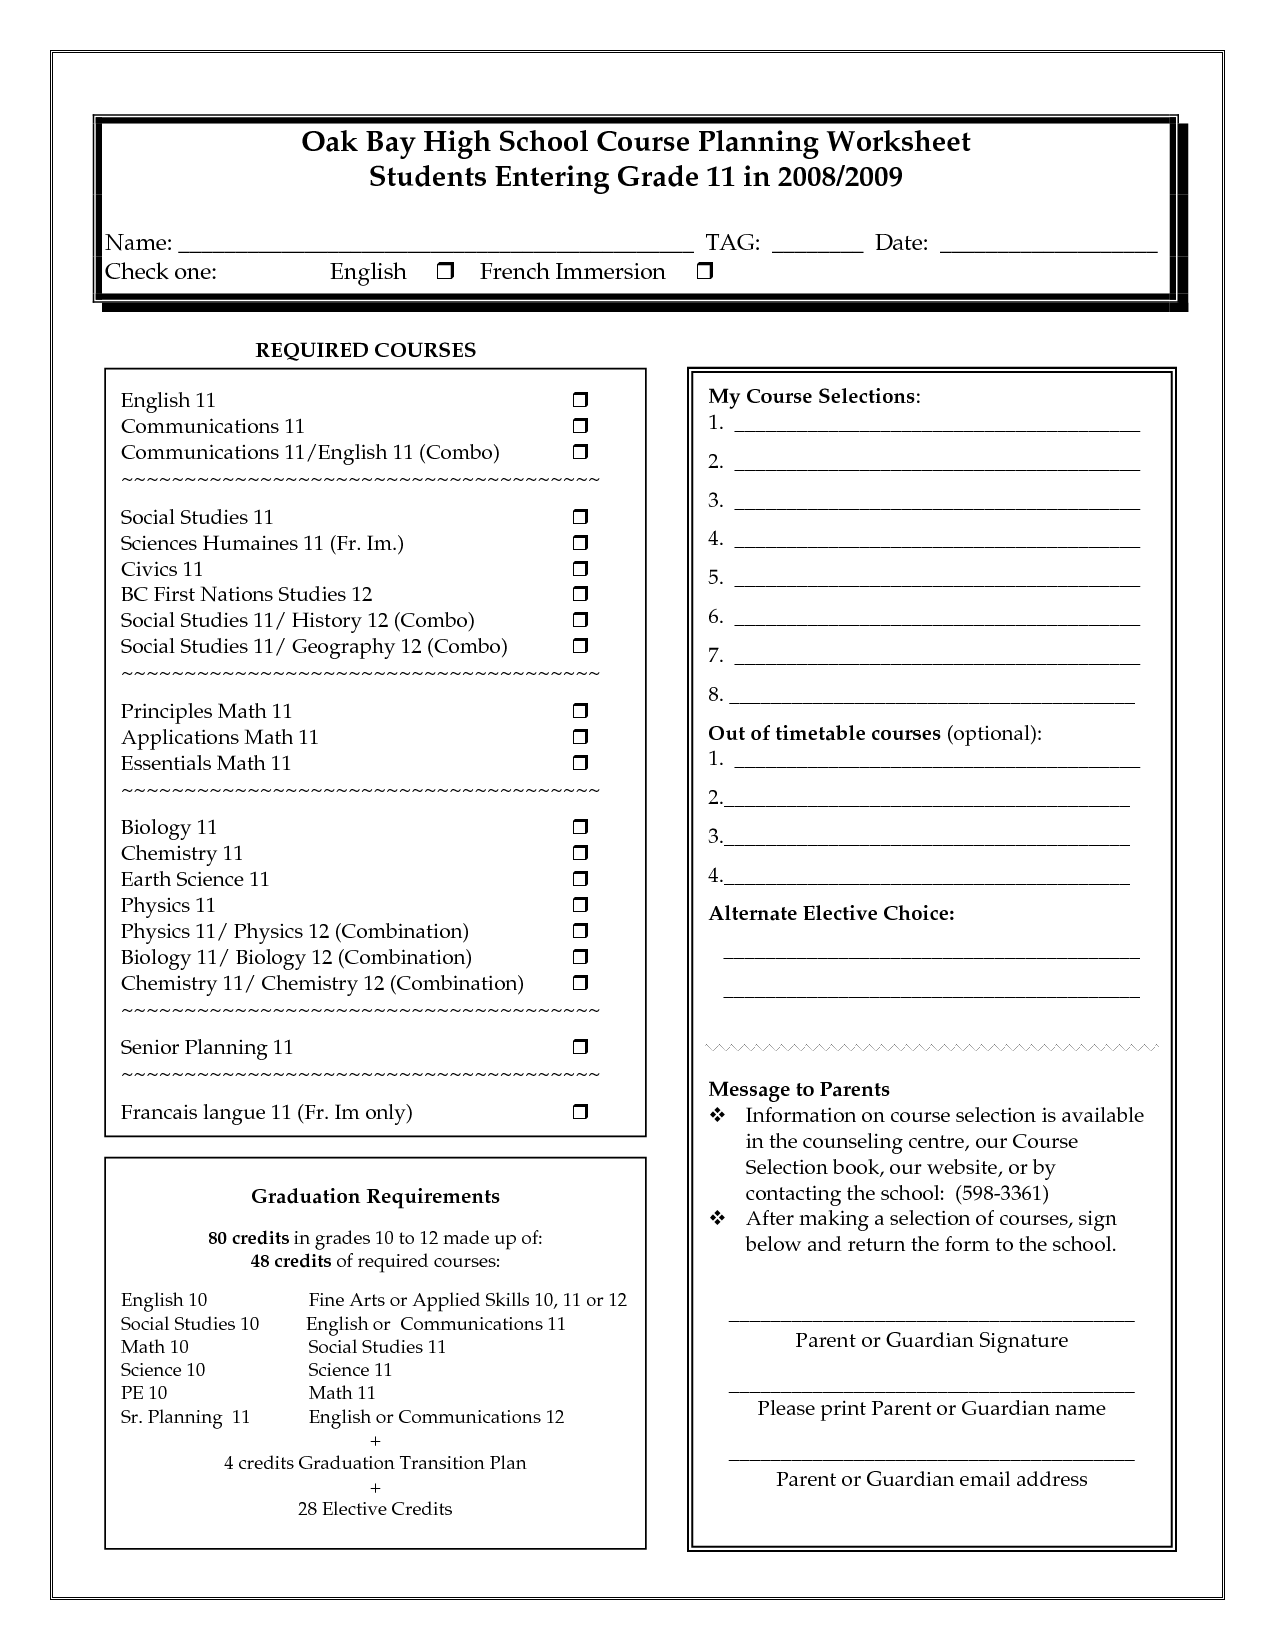 FREE Printable Resume Workbook for High School Students - Homeschool Giveaways